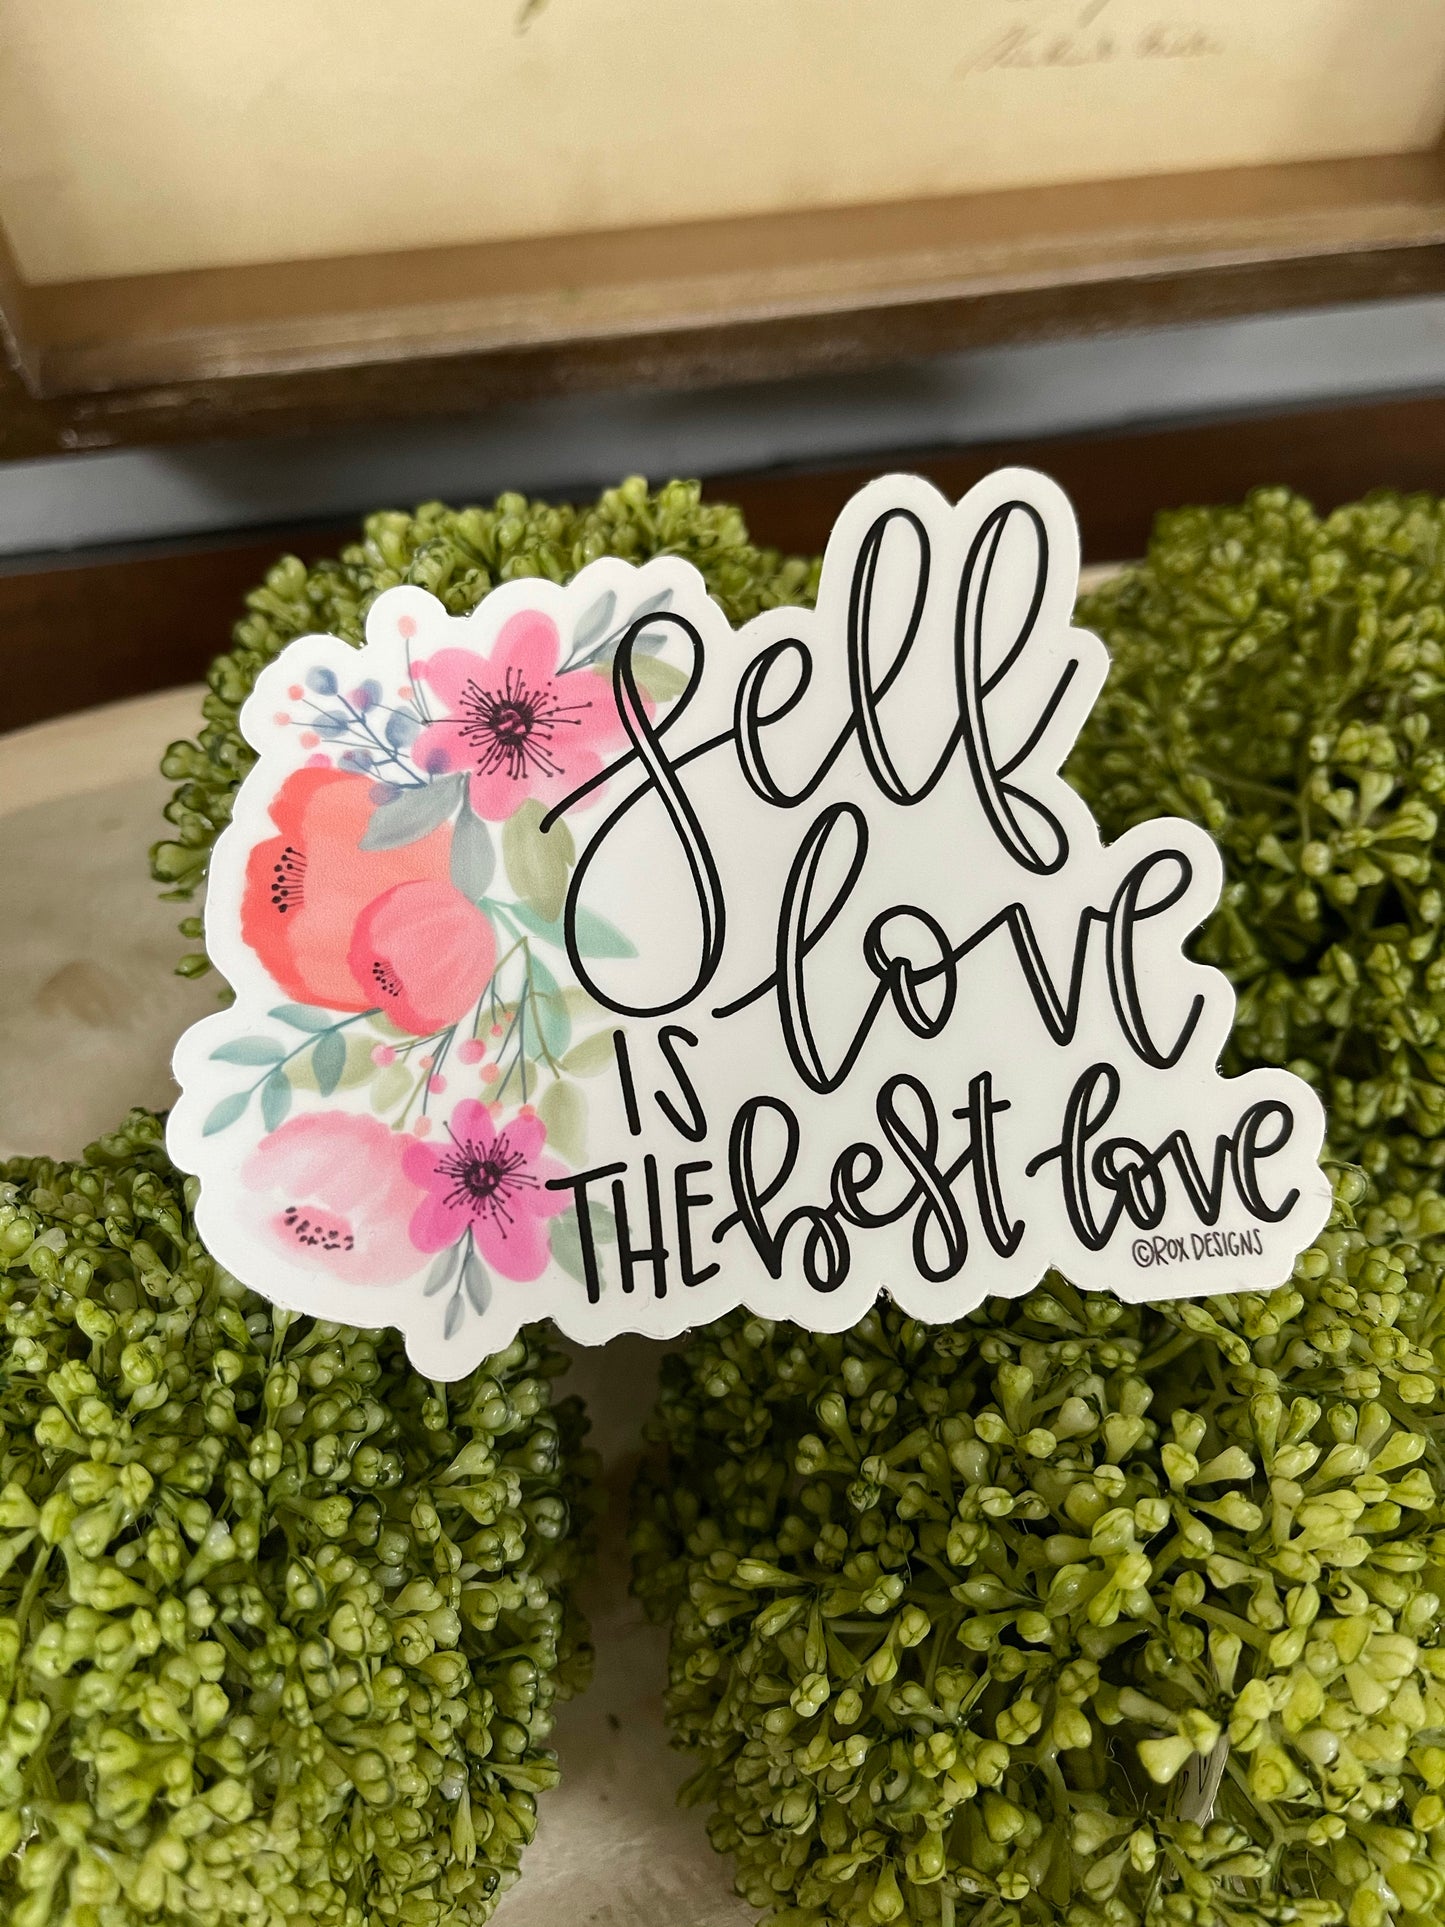 Self love is the best love sticker